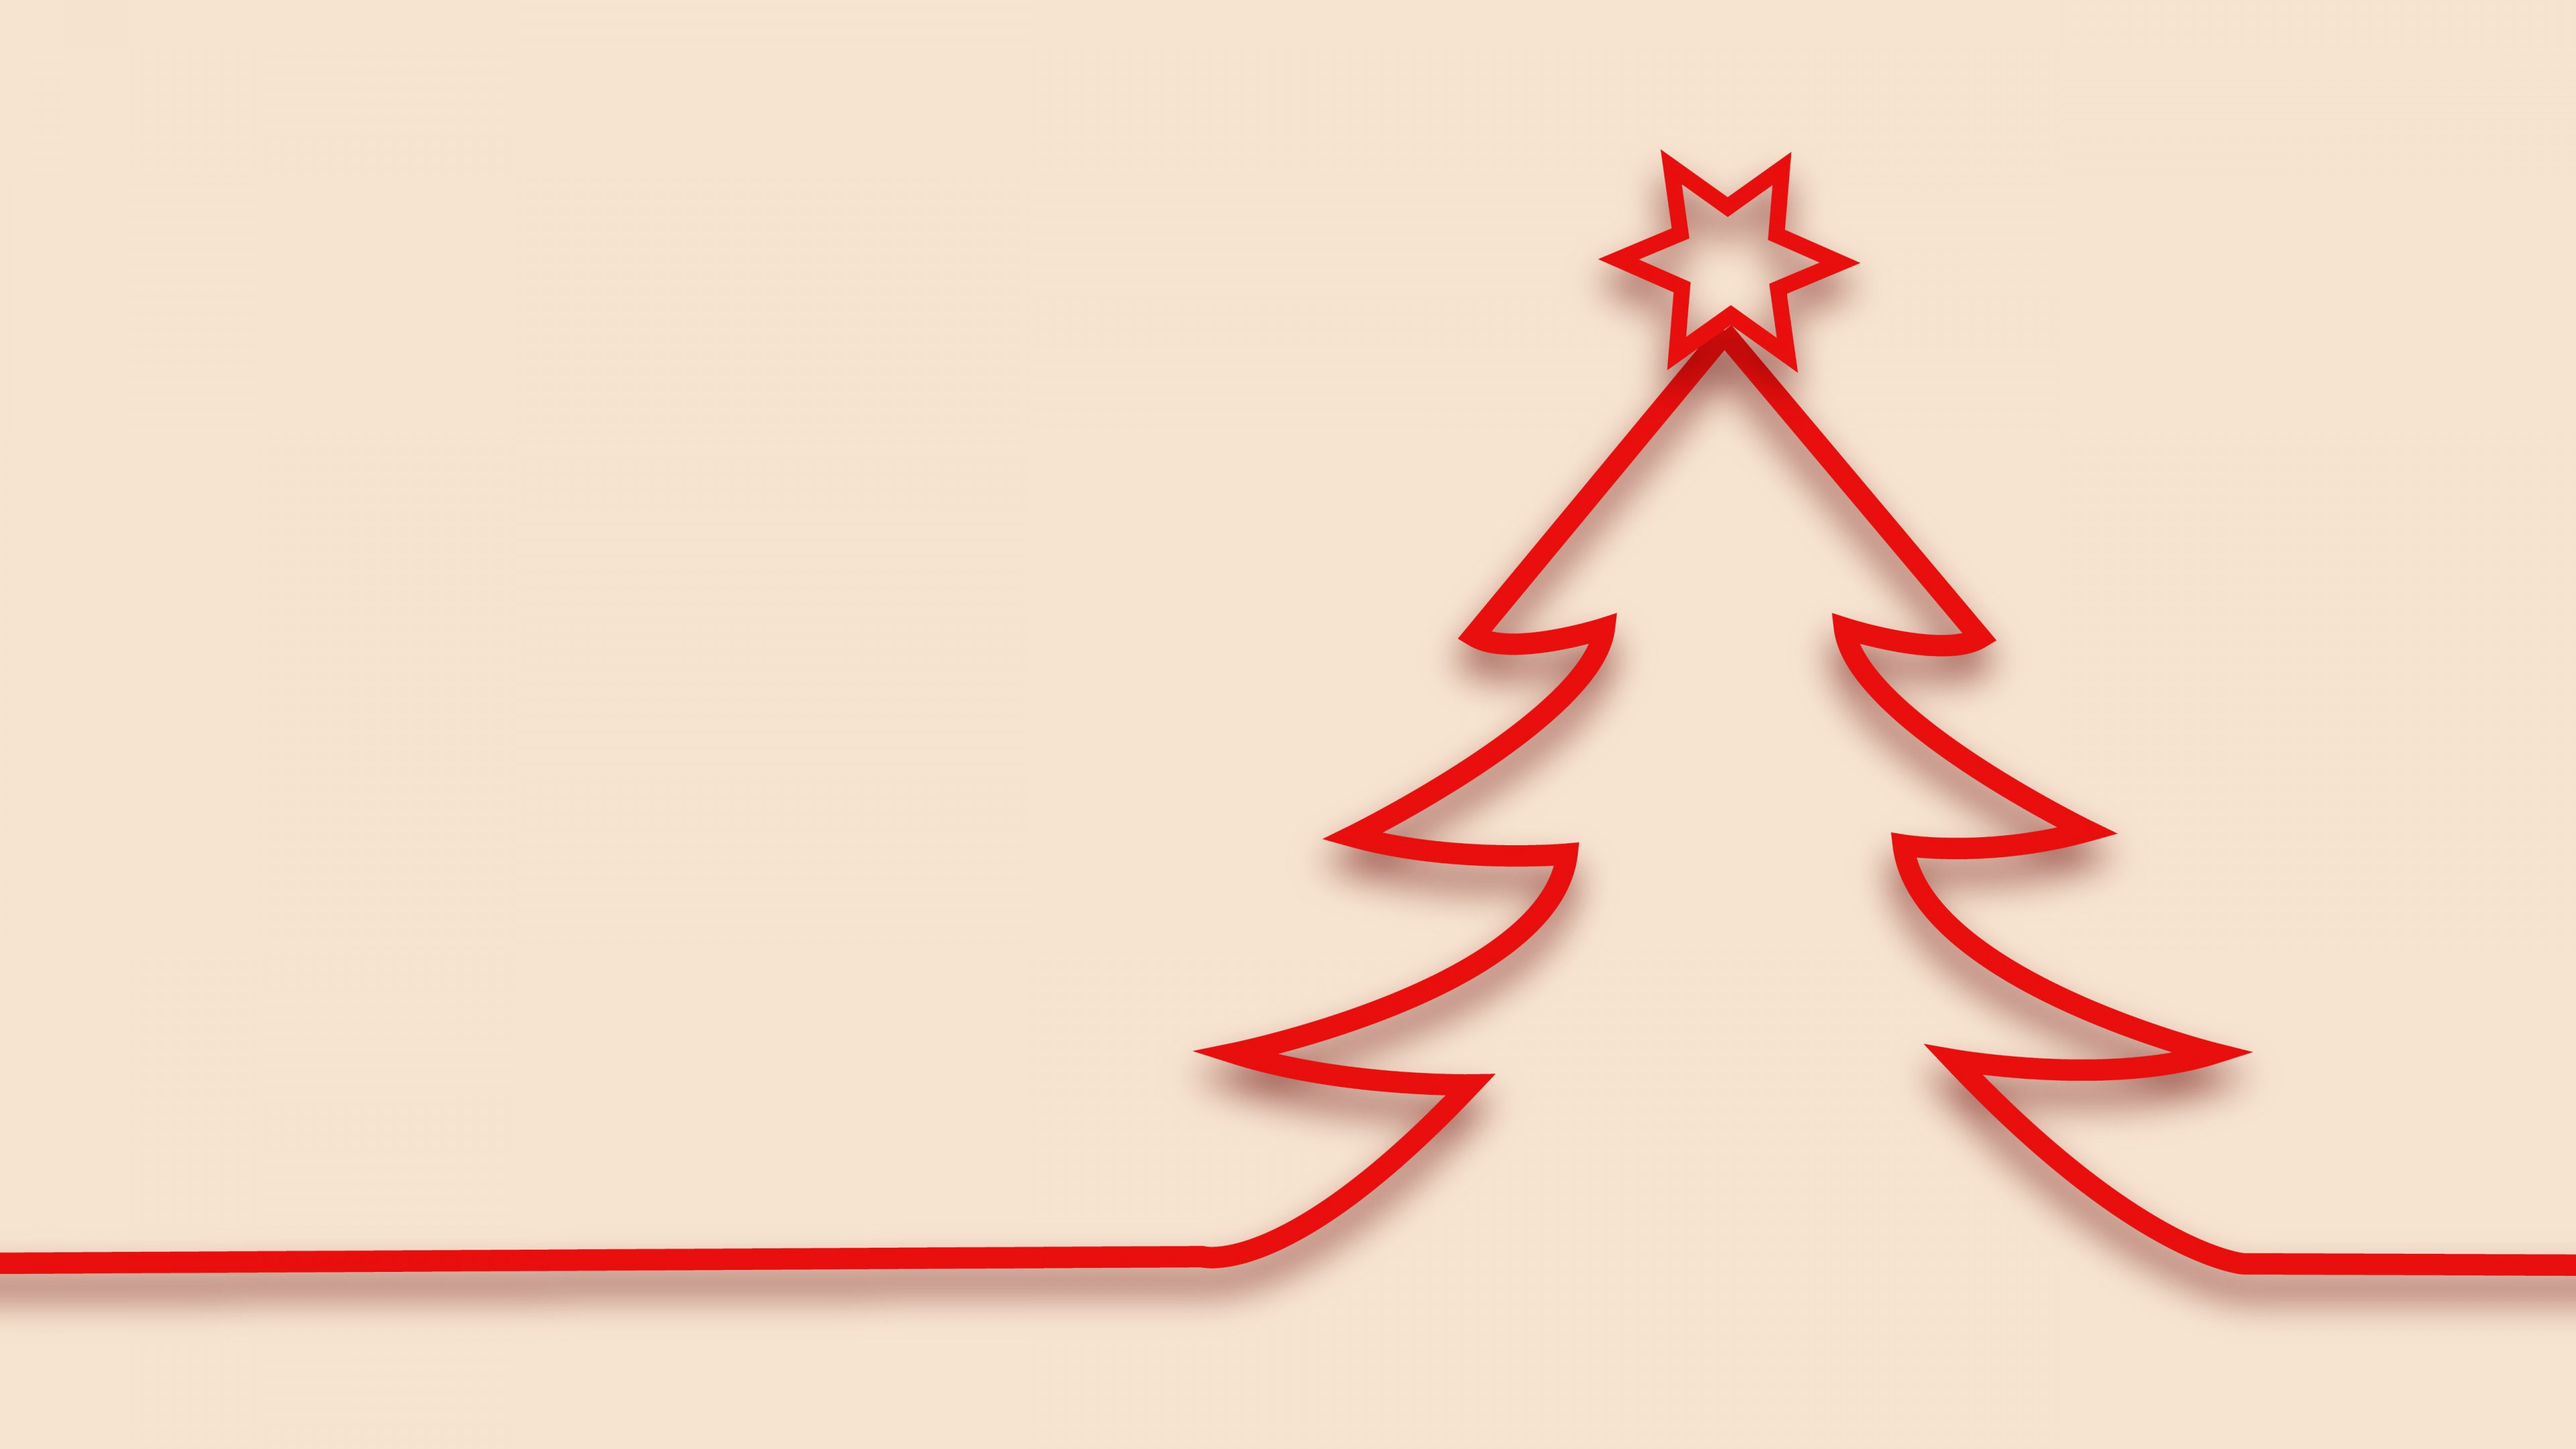 Red minimalistic Christmas tree design wallpaper 3840x2160